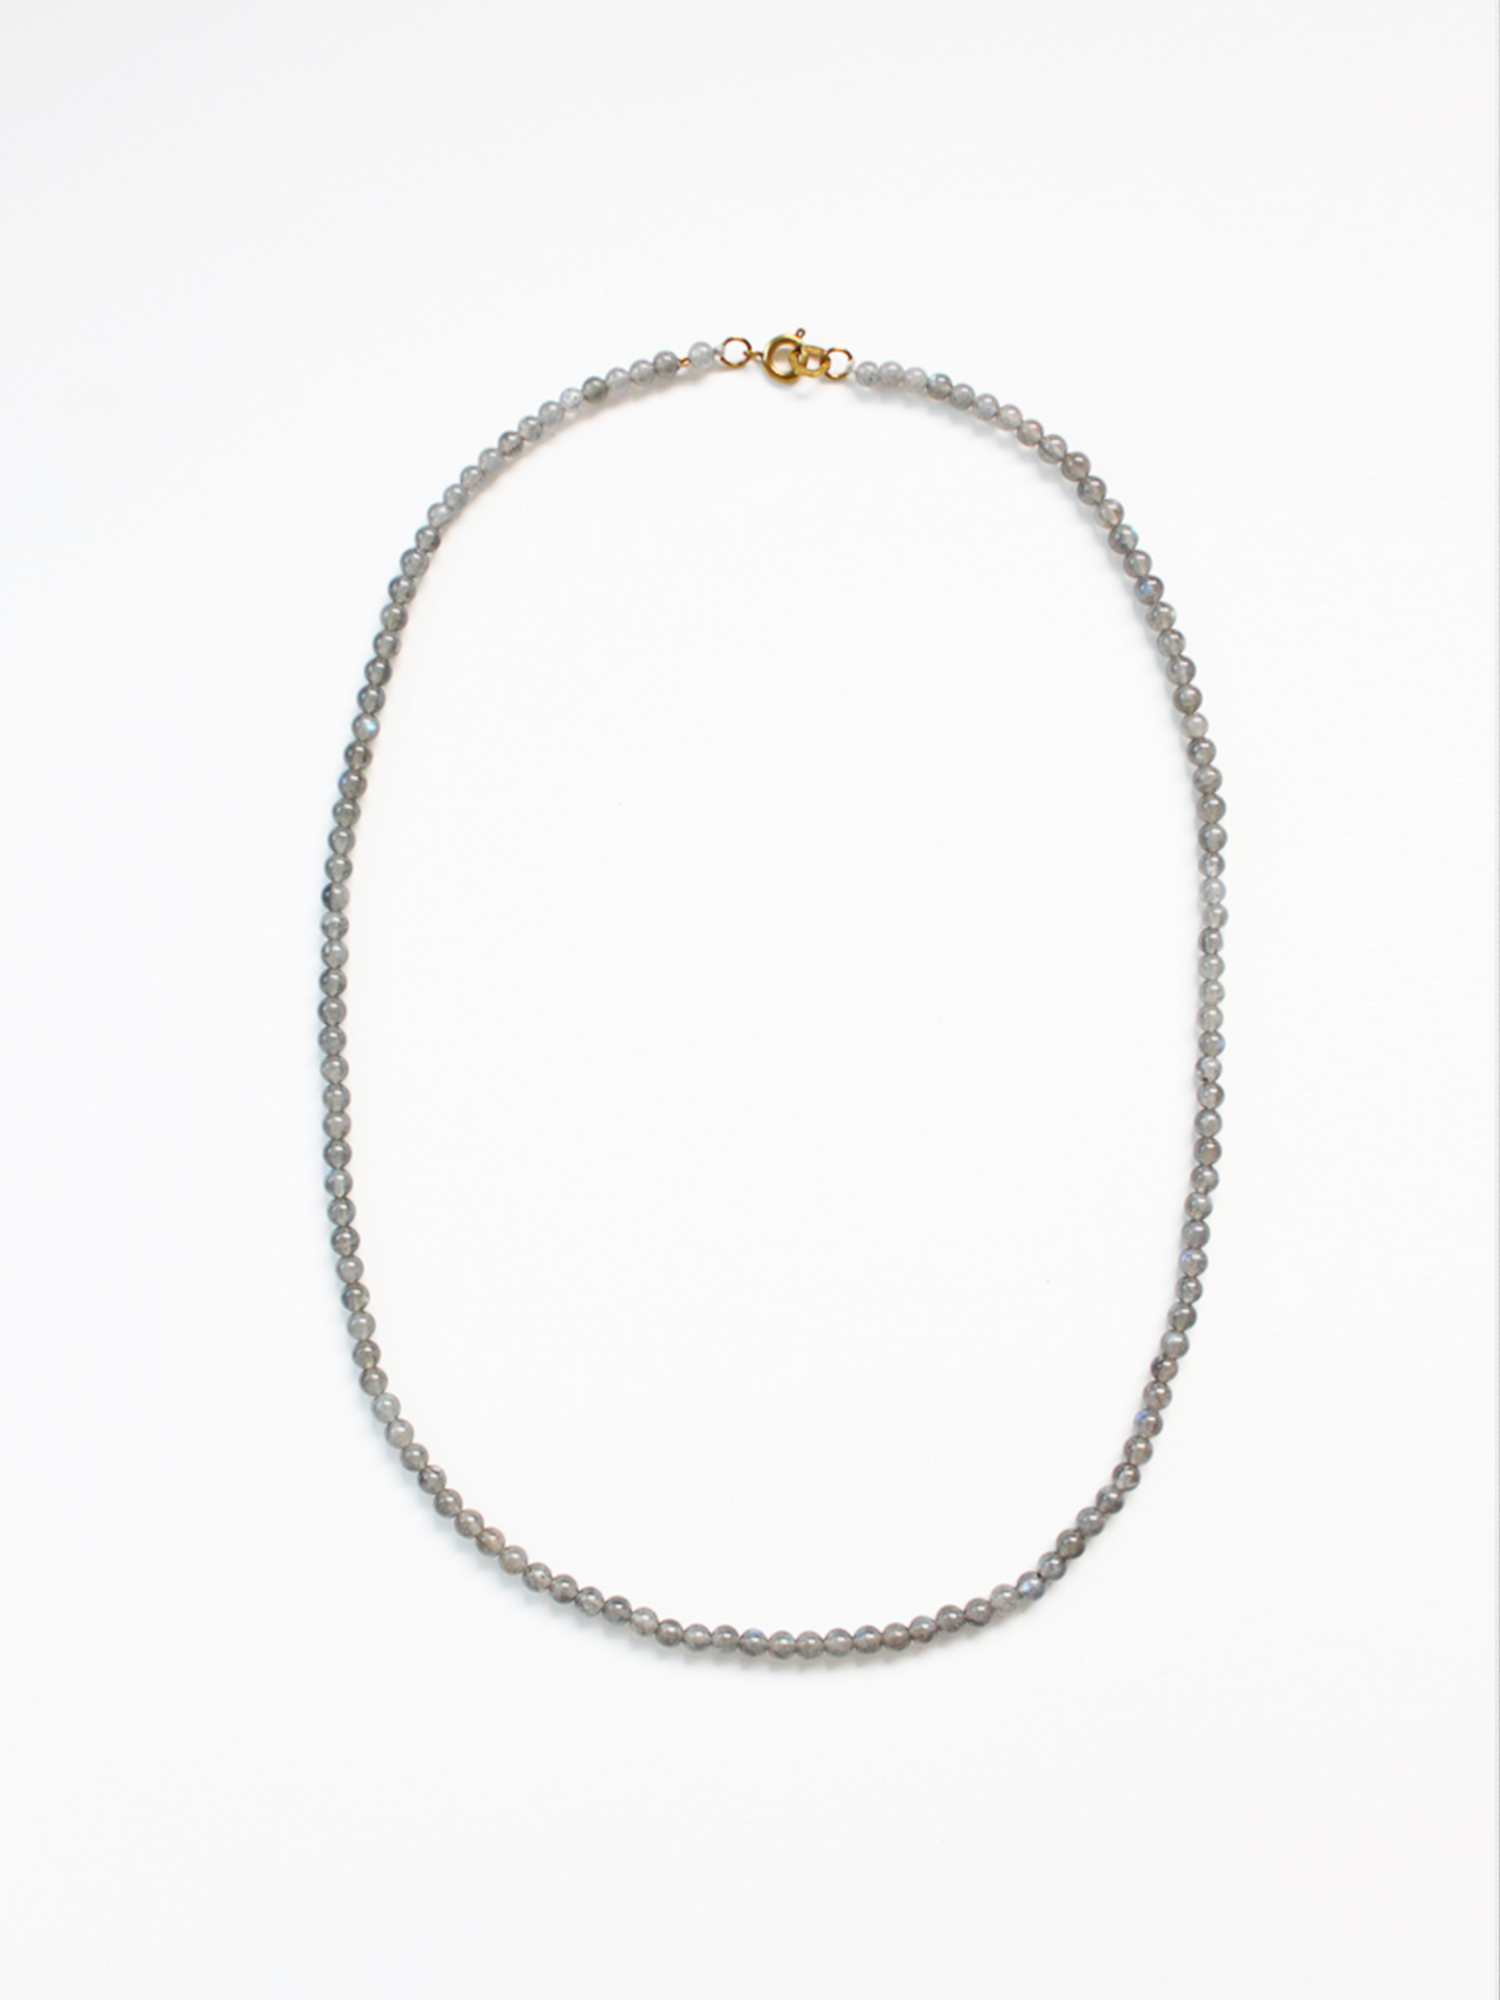 Stone Necklace - Labradorite 4mm